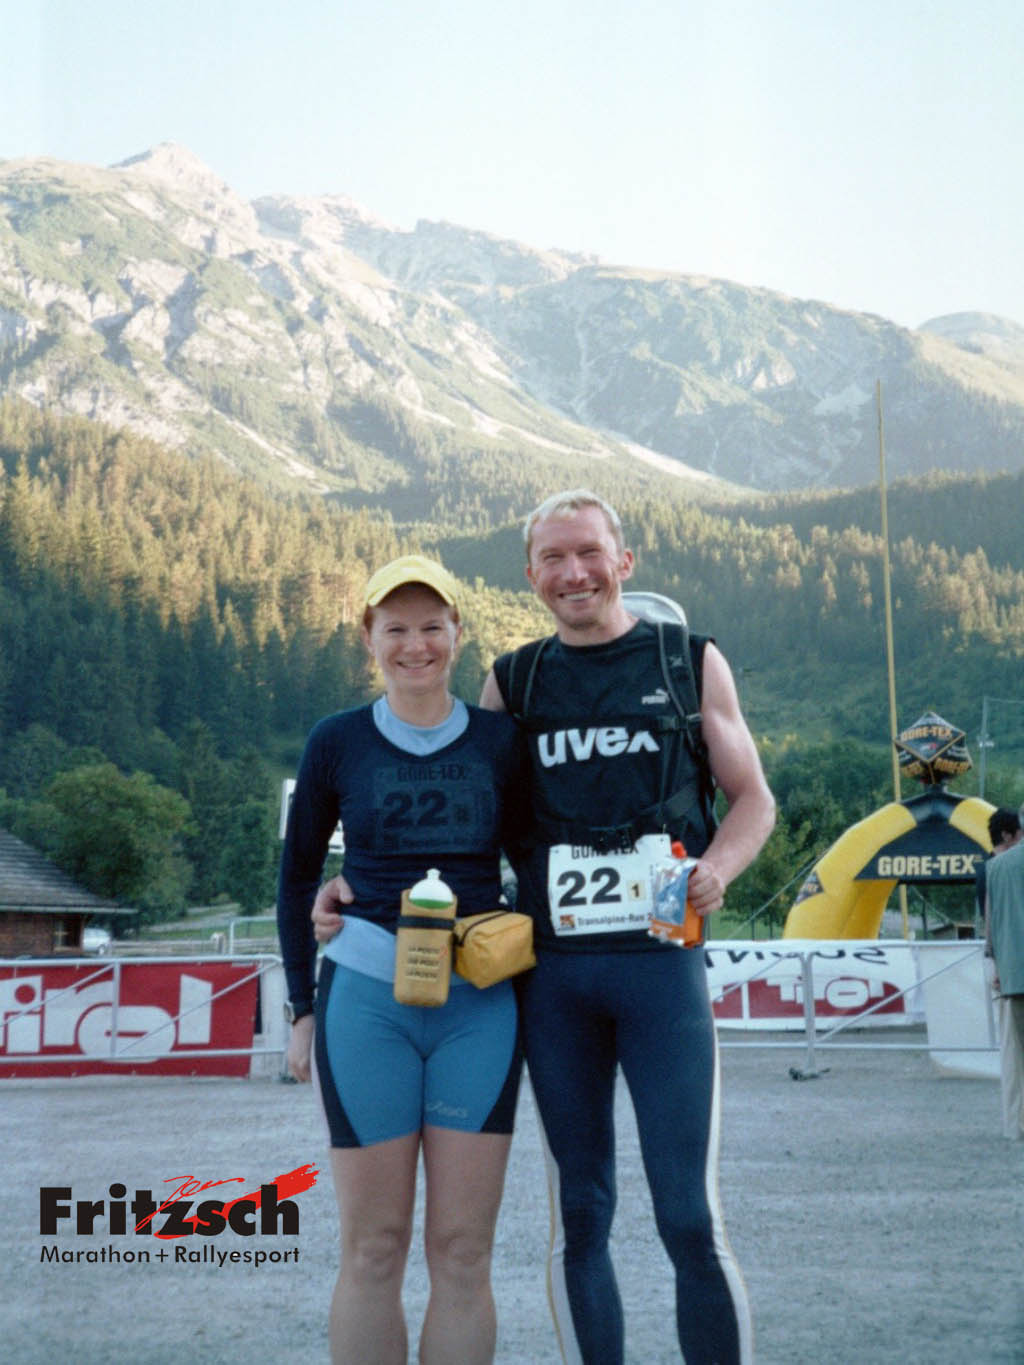 Transalpine long-distance marathon for exceptional athletes